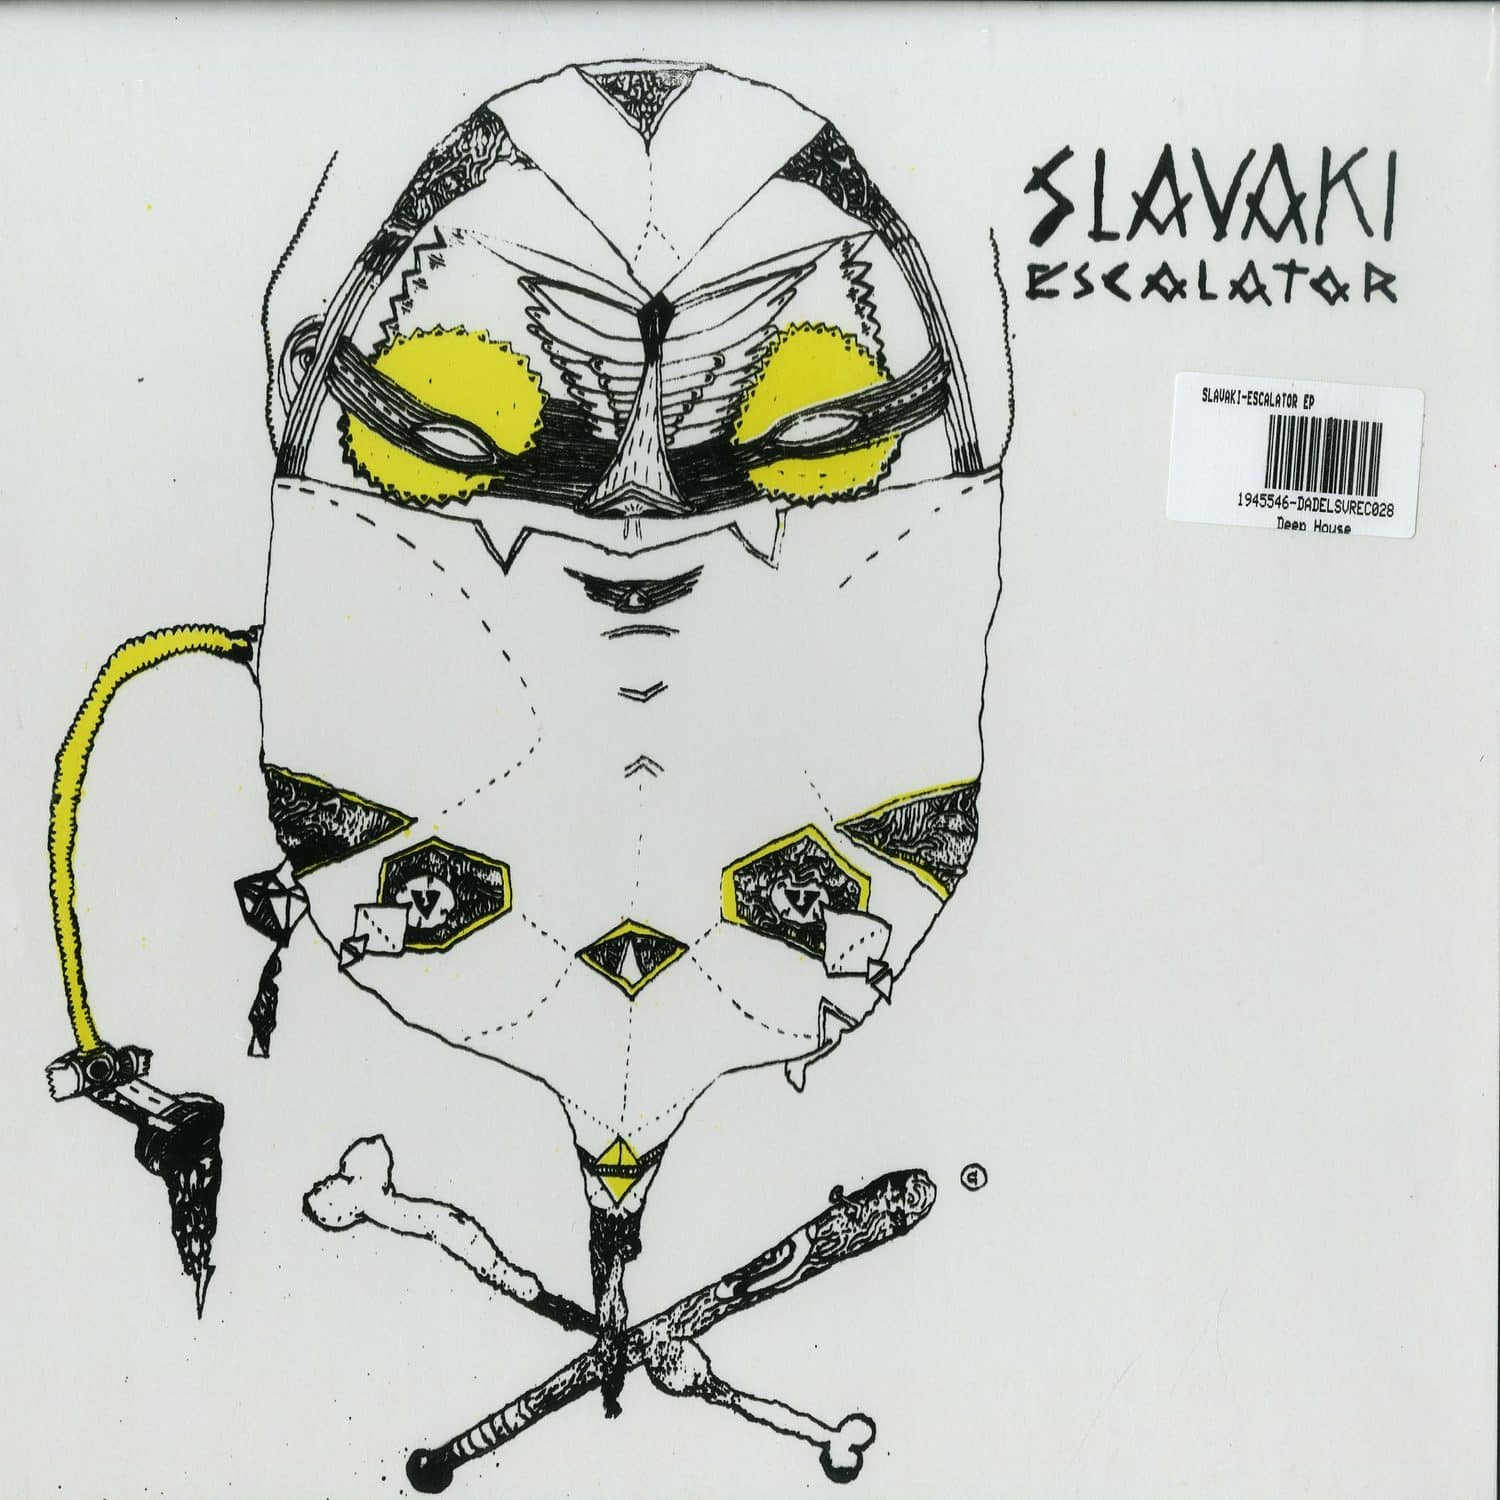 Slavaki - ESCALATOR EP 